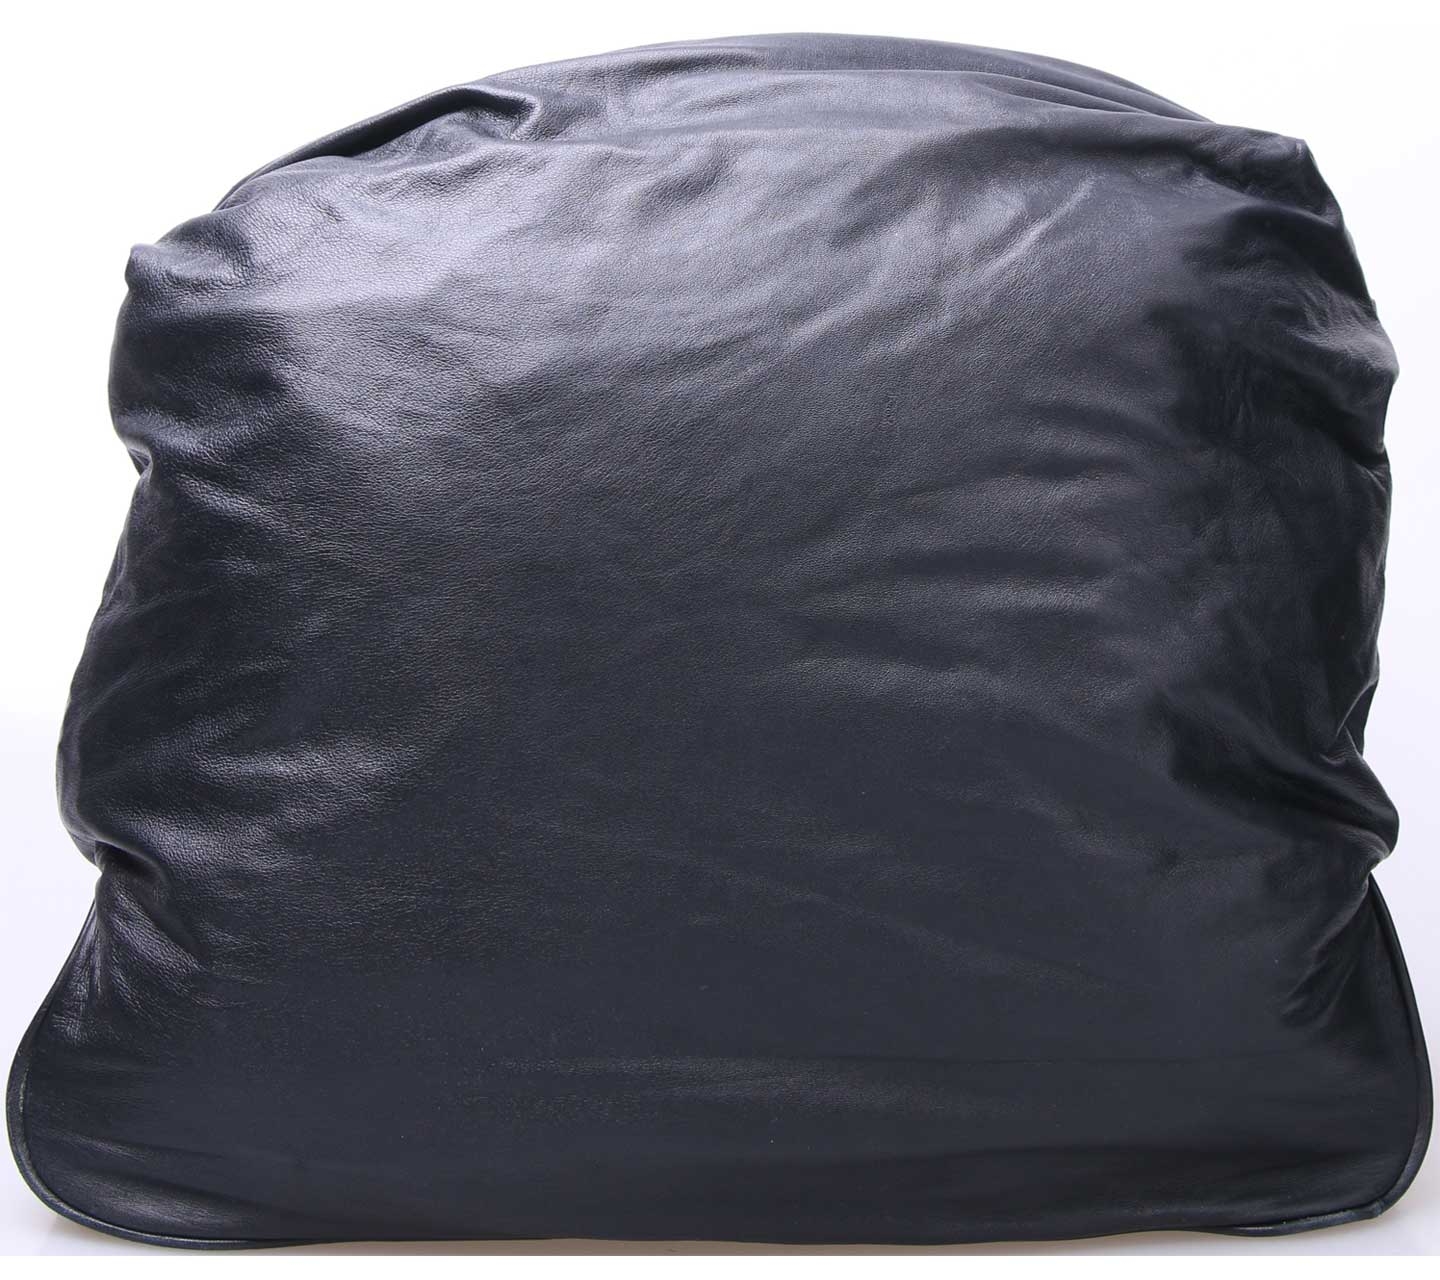 Lulu Milan Black Tote Bag